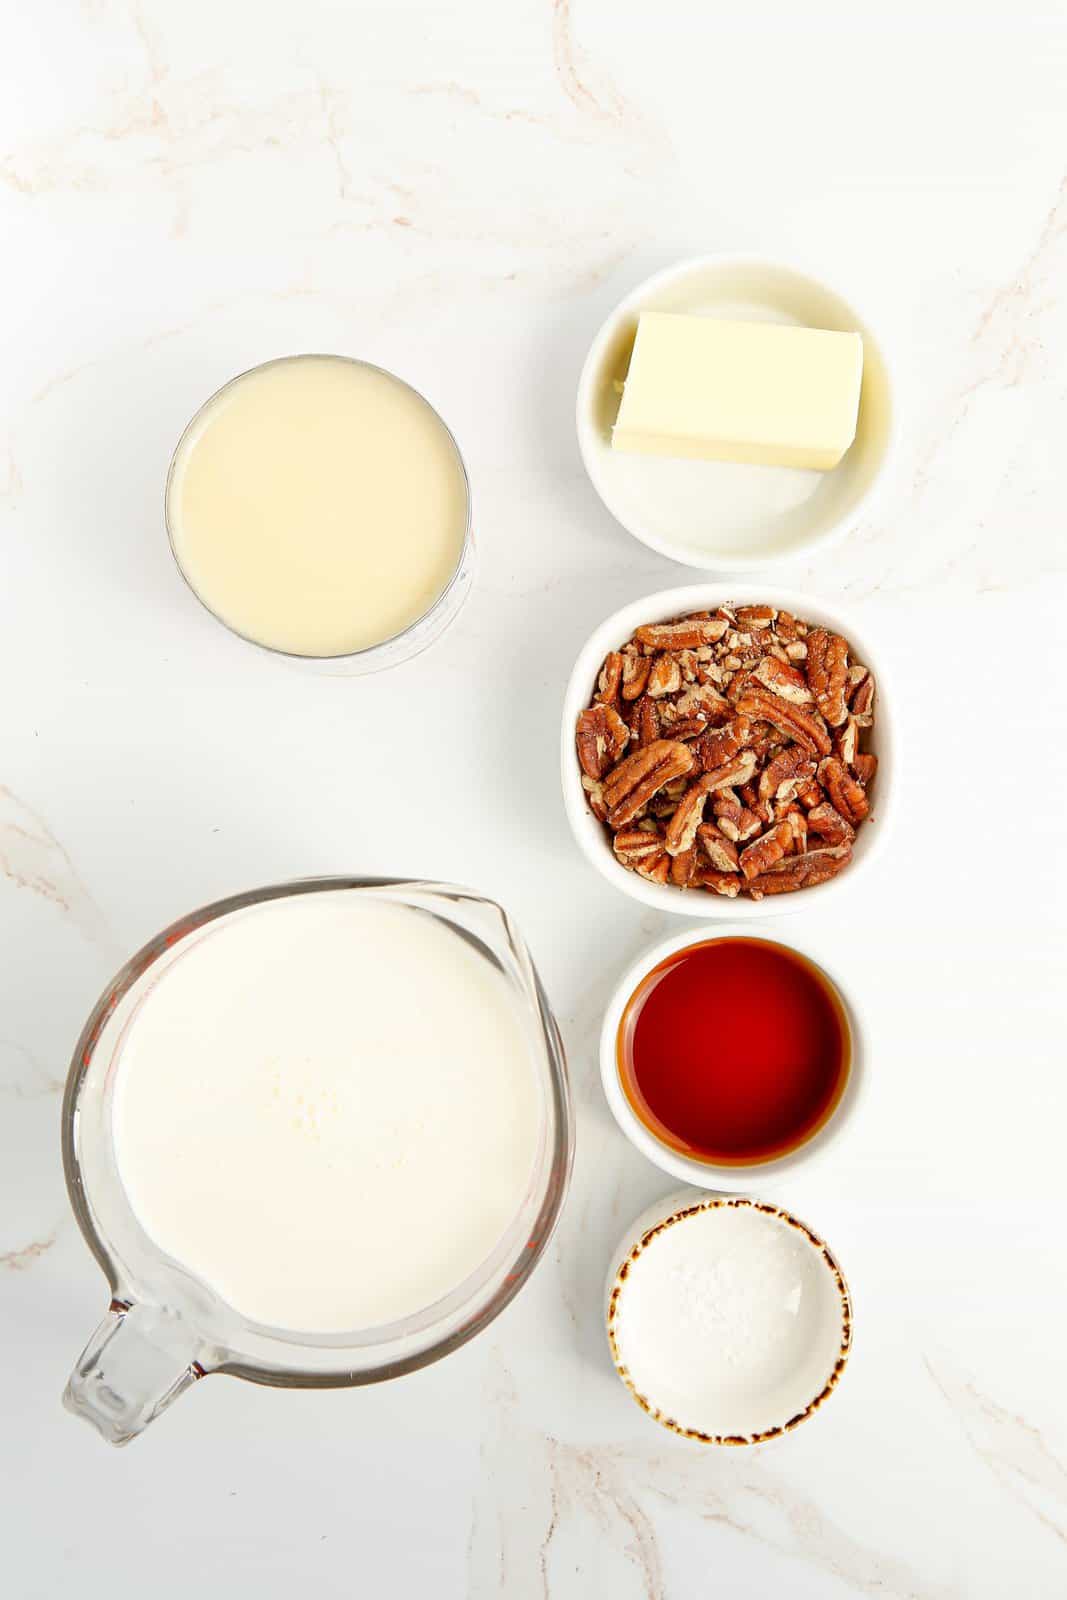 Ingredients needed: heavy cream, sweetened condensed milk, vanilla extract, unsalted butter, pecans and sea salt.